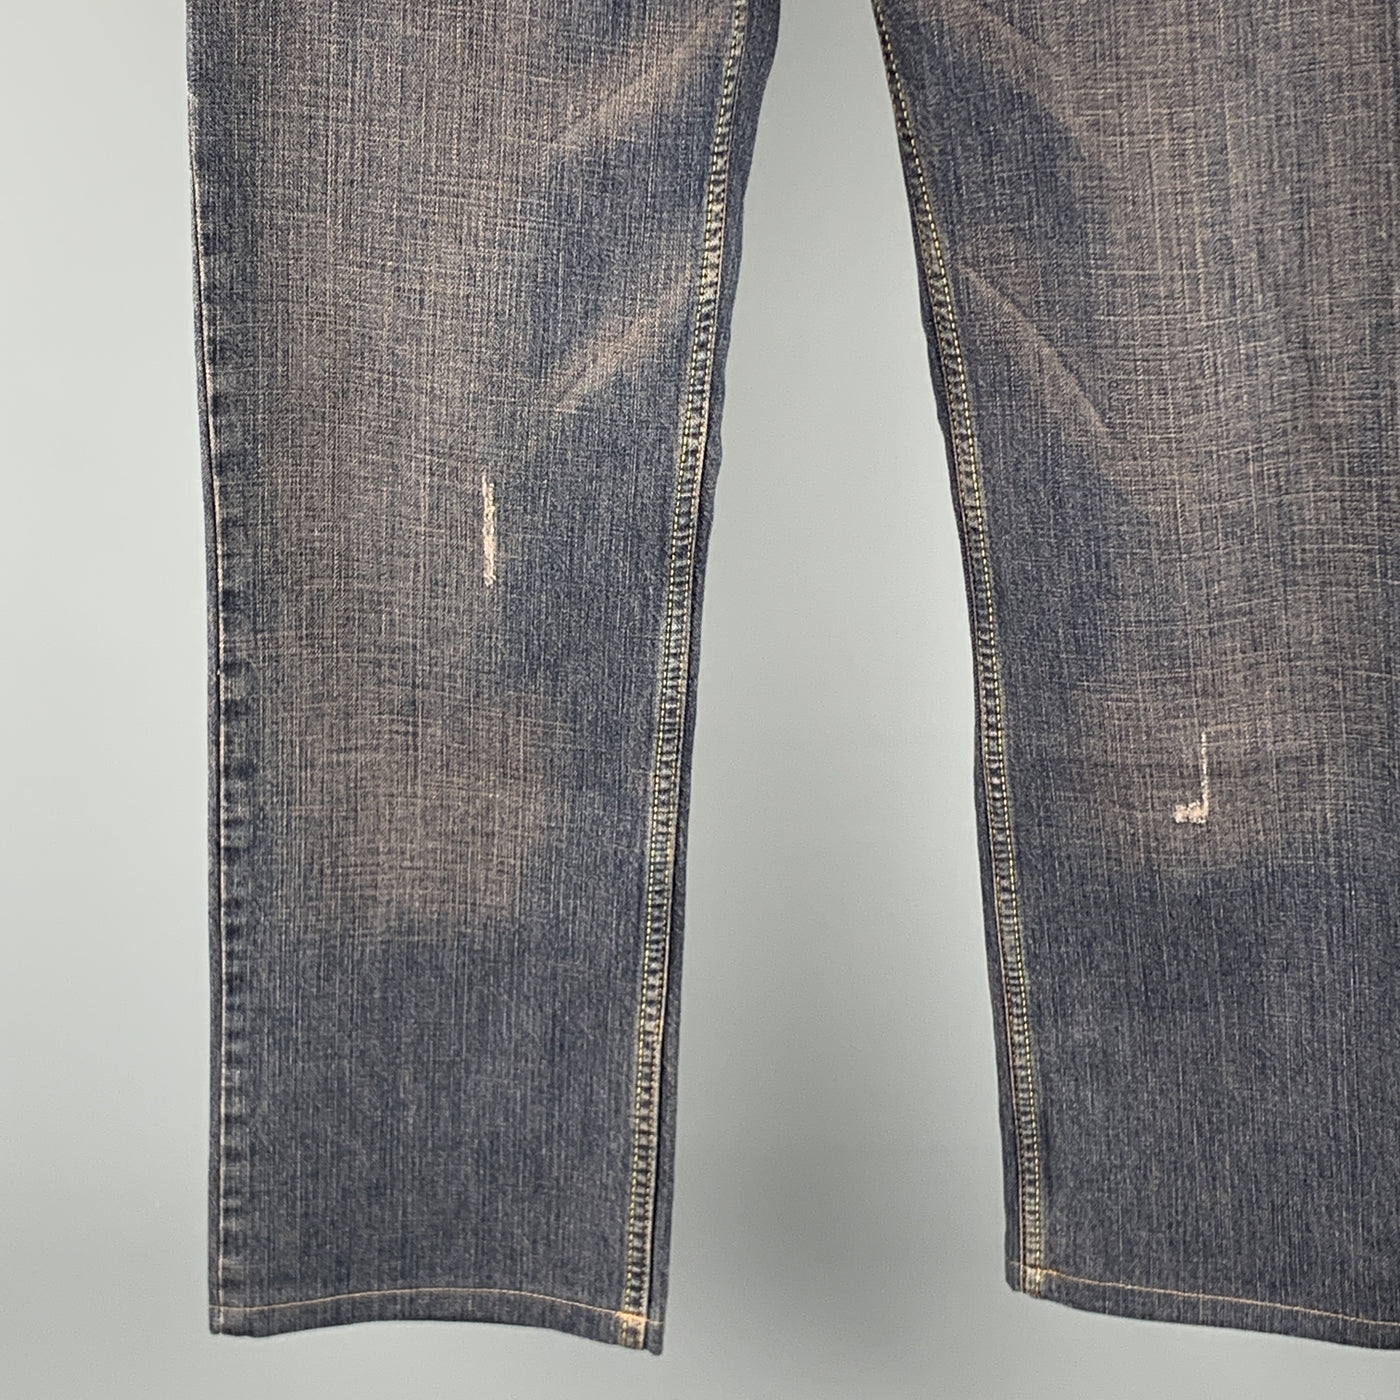 DAVID MAYER Size 32 x 30 Indigo Wash Denim Jeans